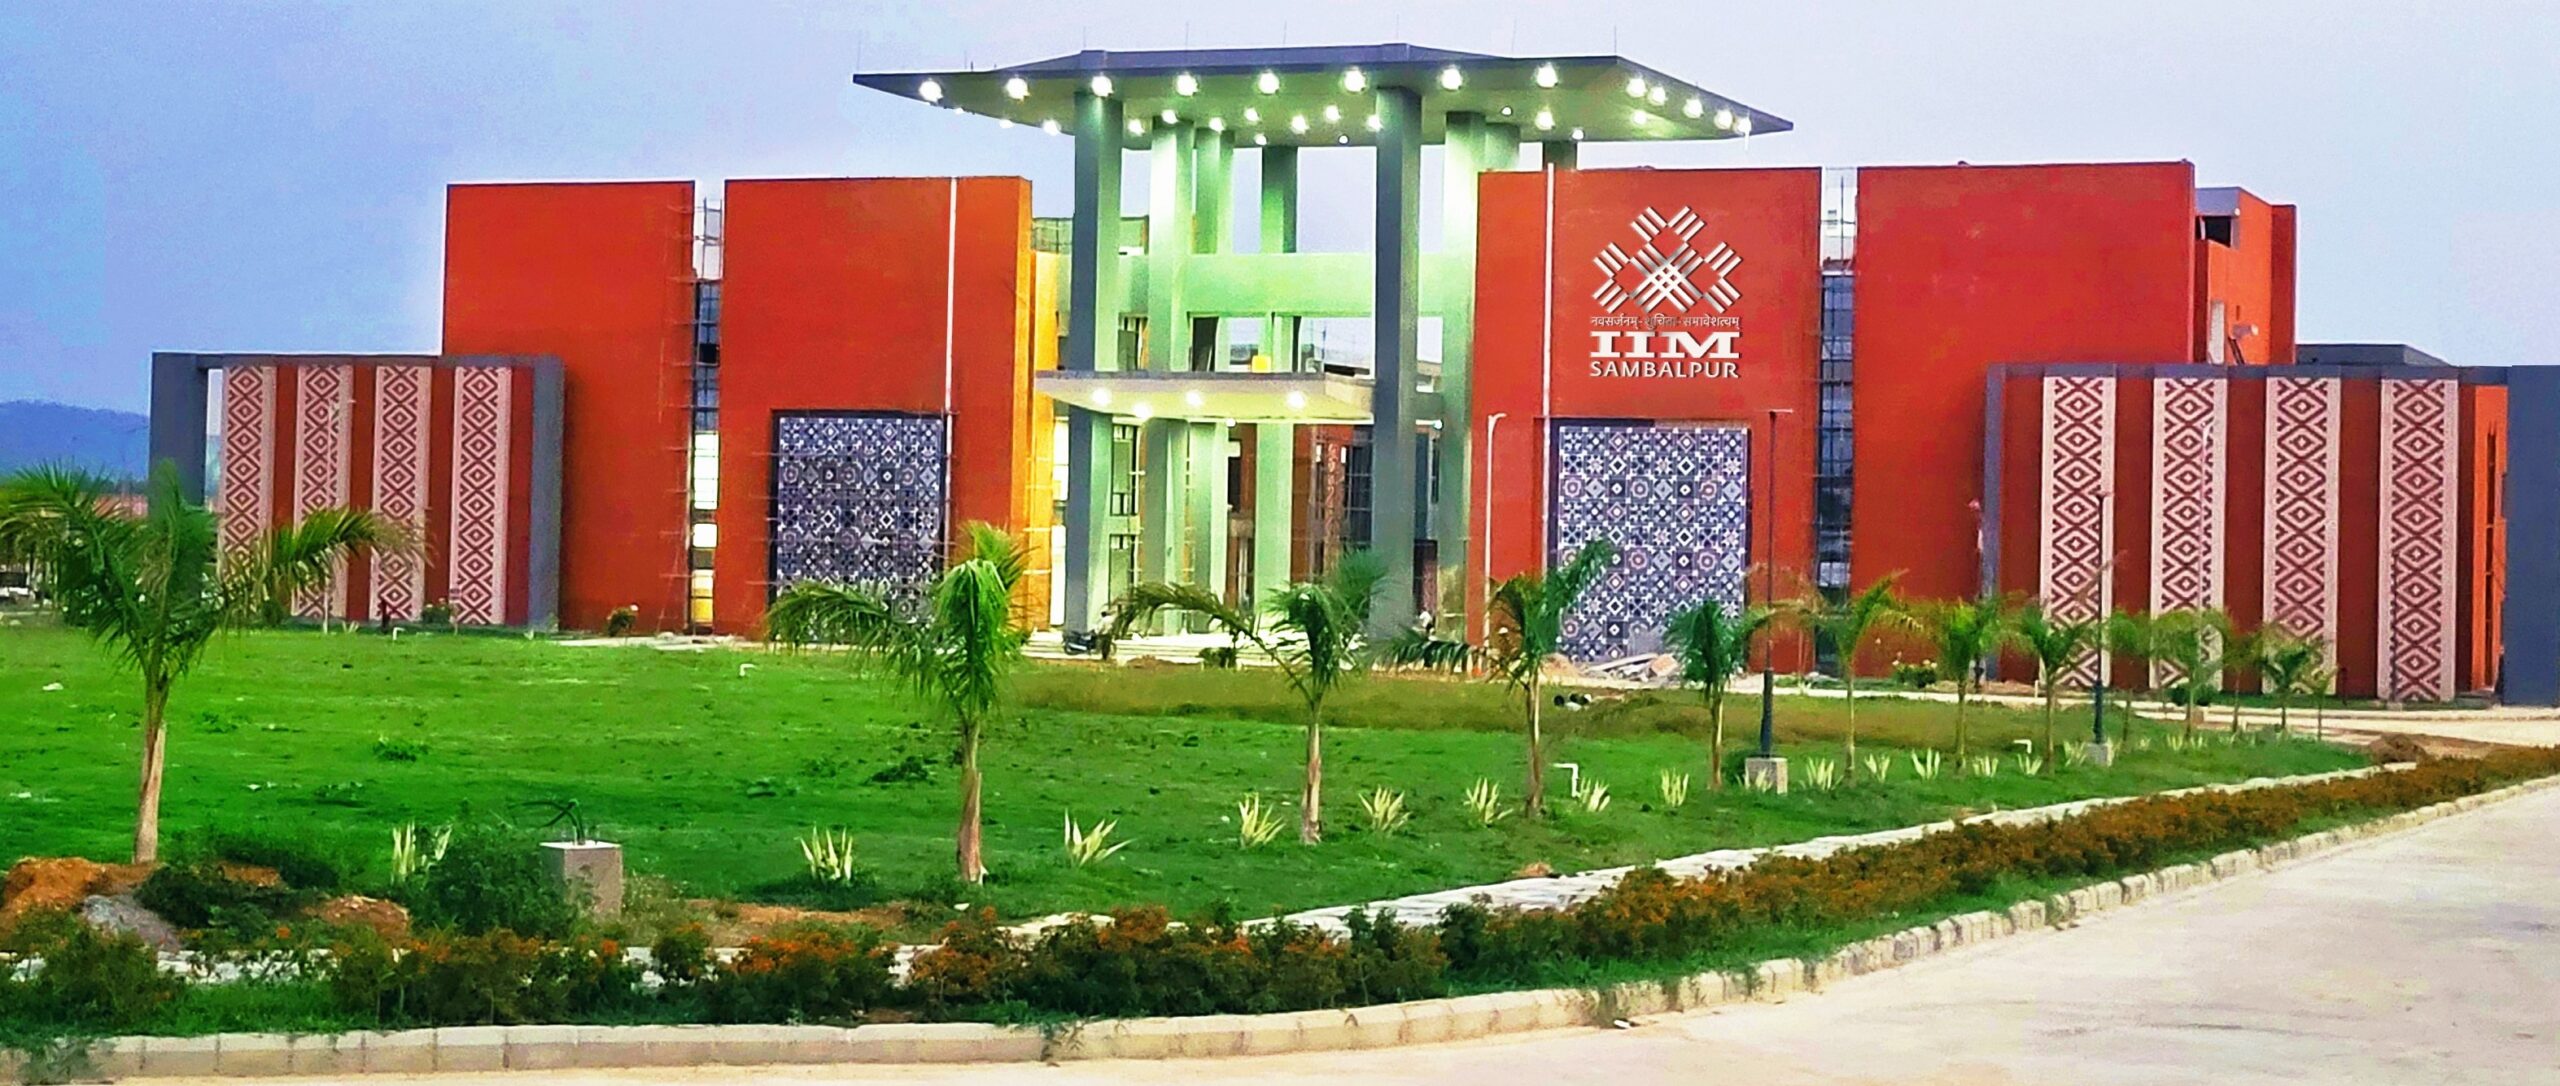 IIM-Sambalpur-Campus-scaled.jpg